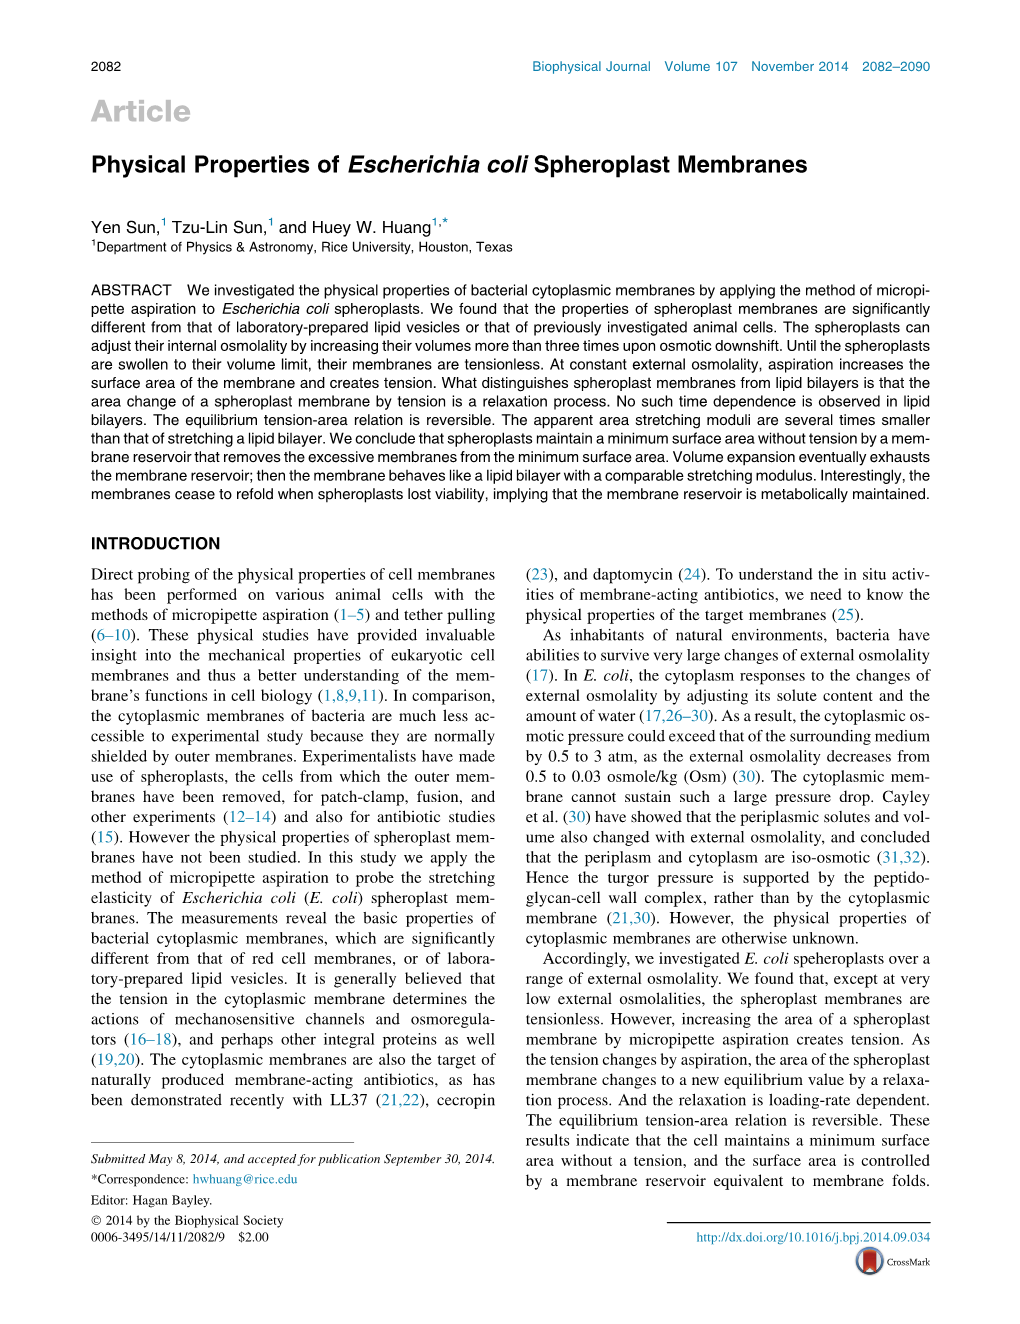 Physical Properties of Escherichia Coli Spheroplast Membranes